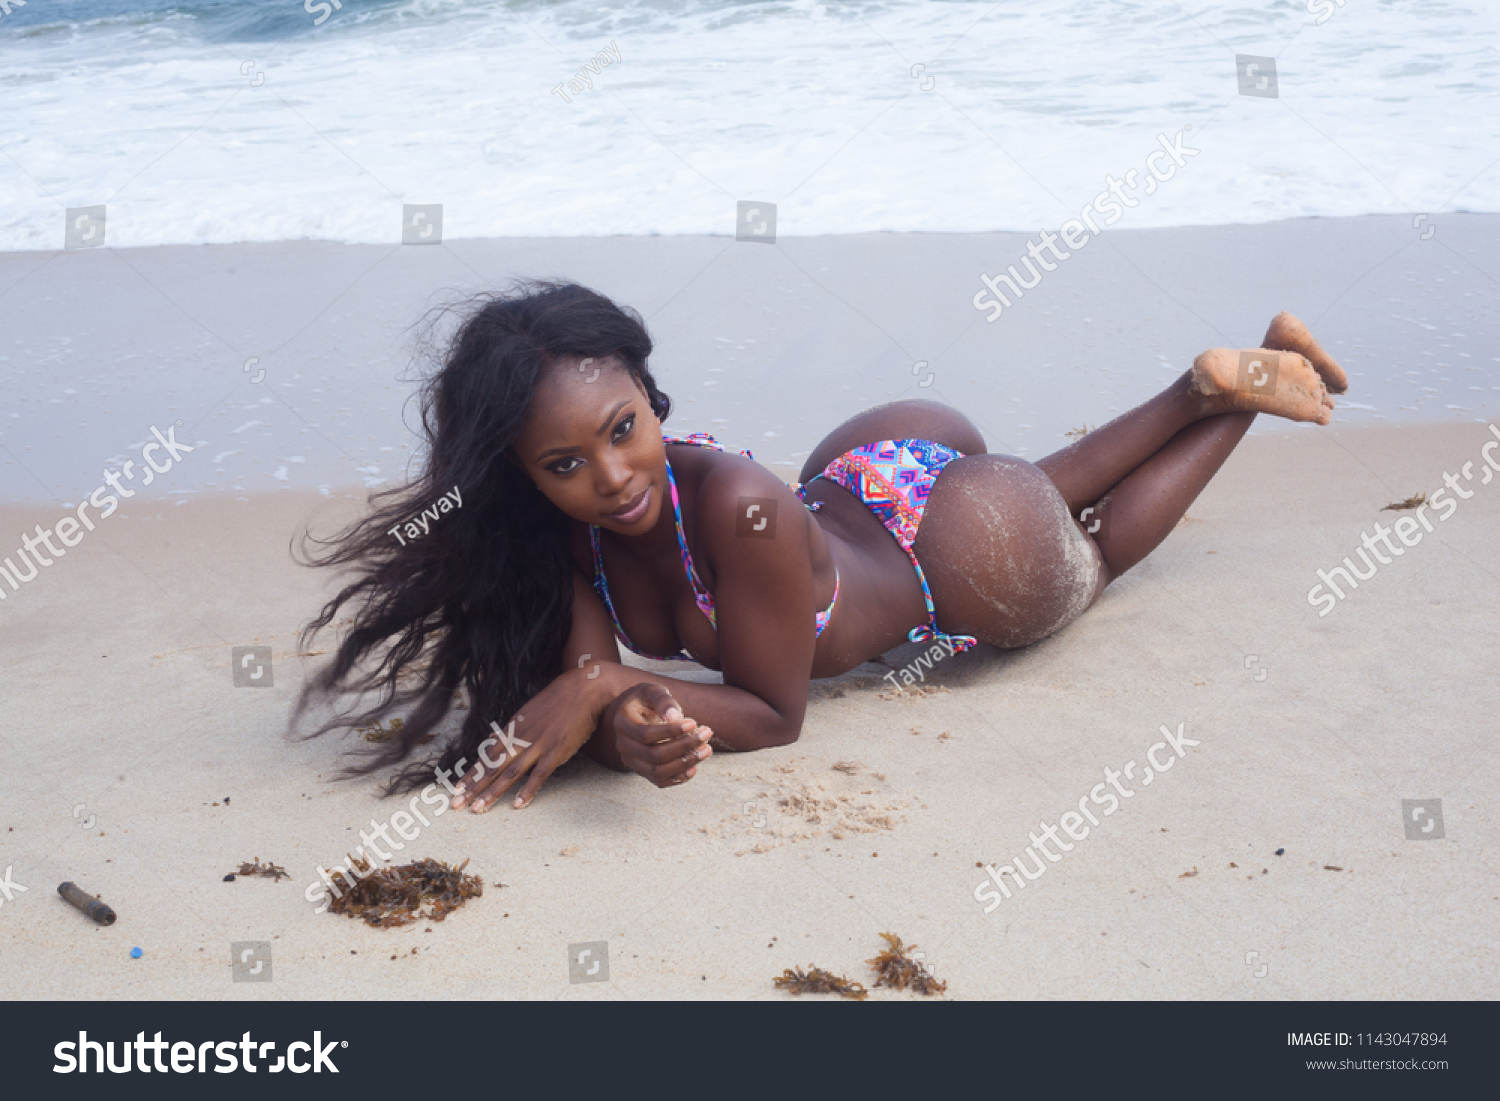 Ebony sexy girls photos